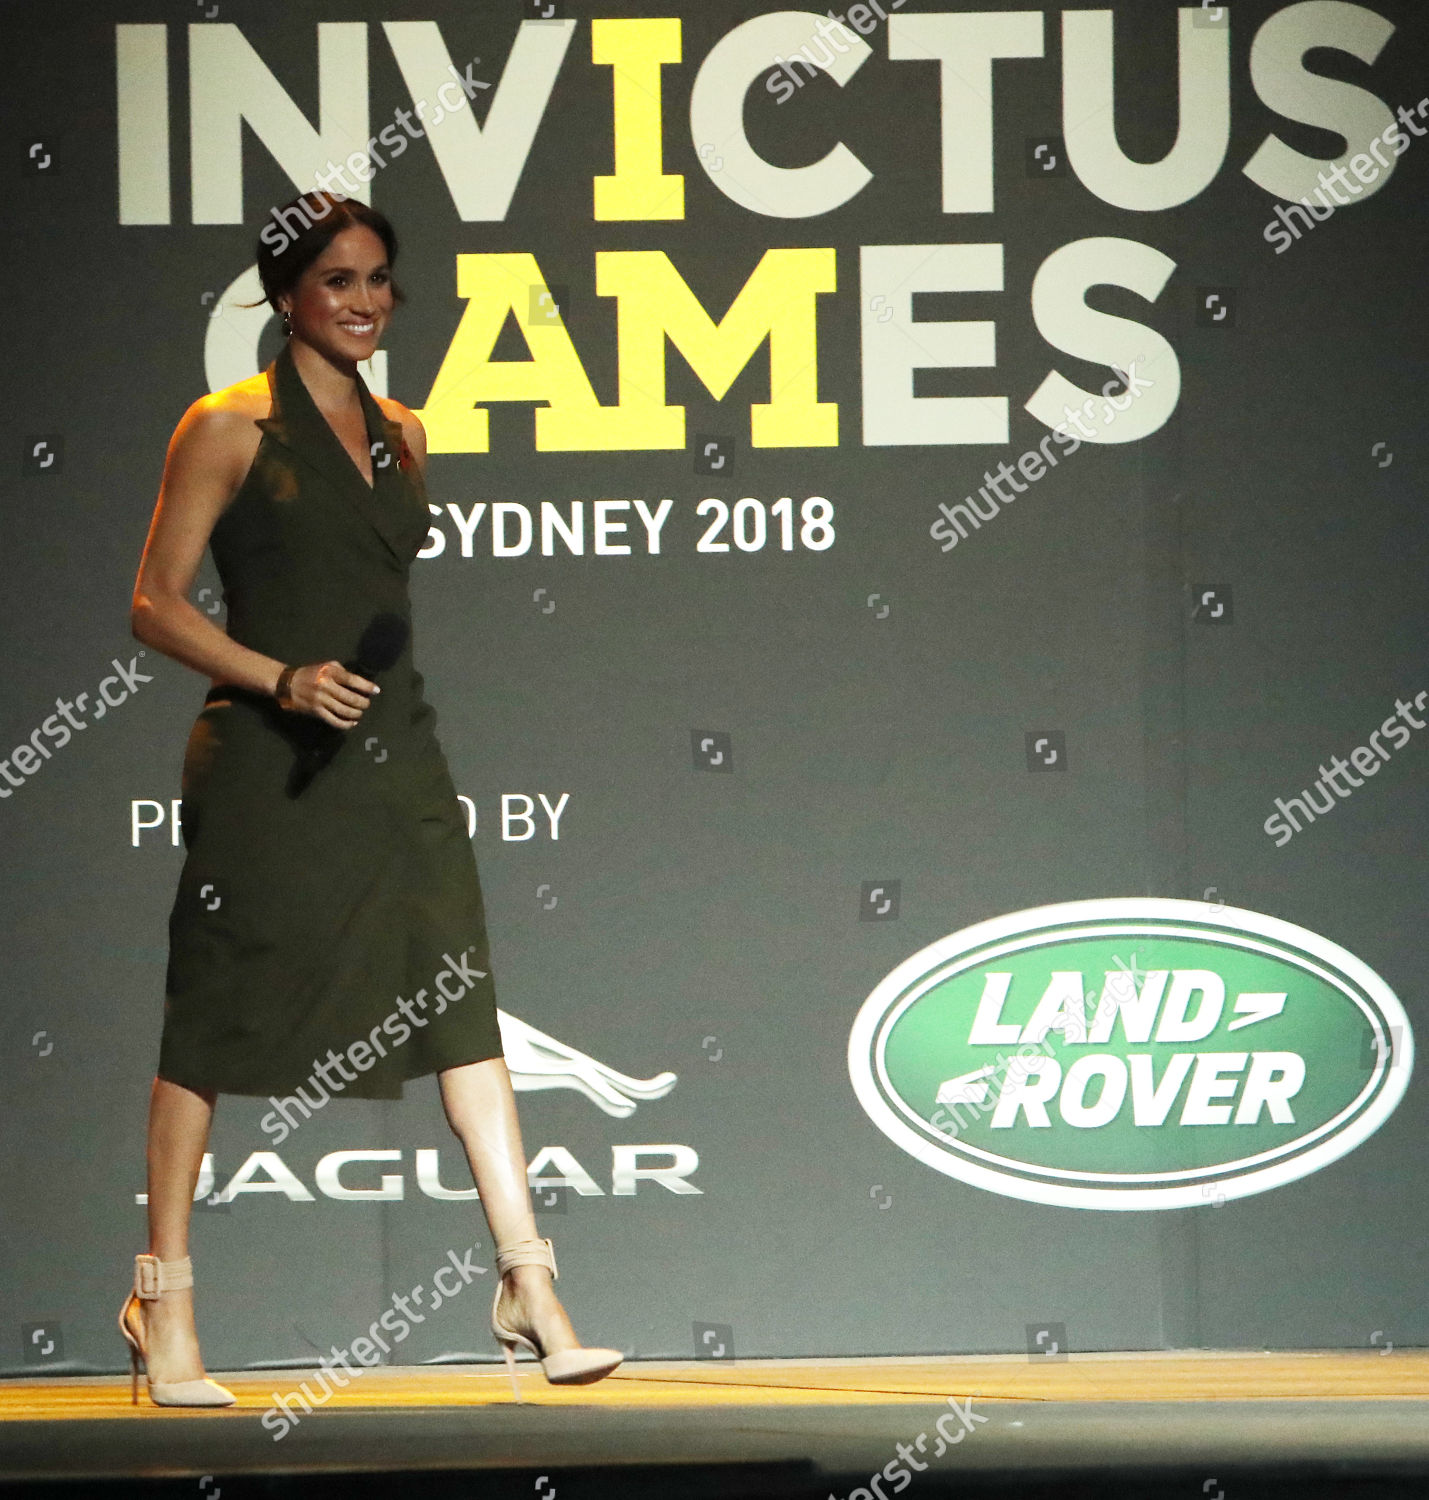 invictus-games-closing-ceremony-sydney-australia-shutterstock-editorial-9946105au.jpg